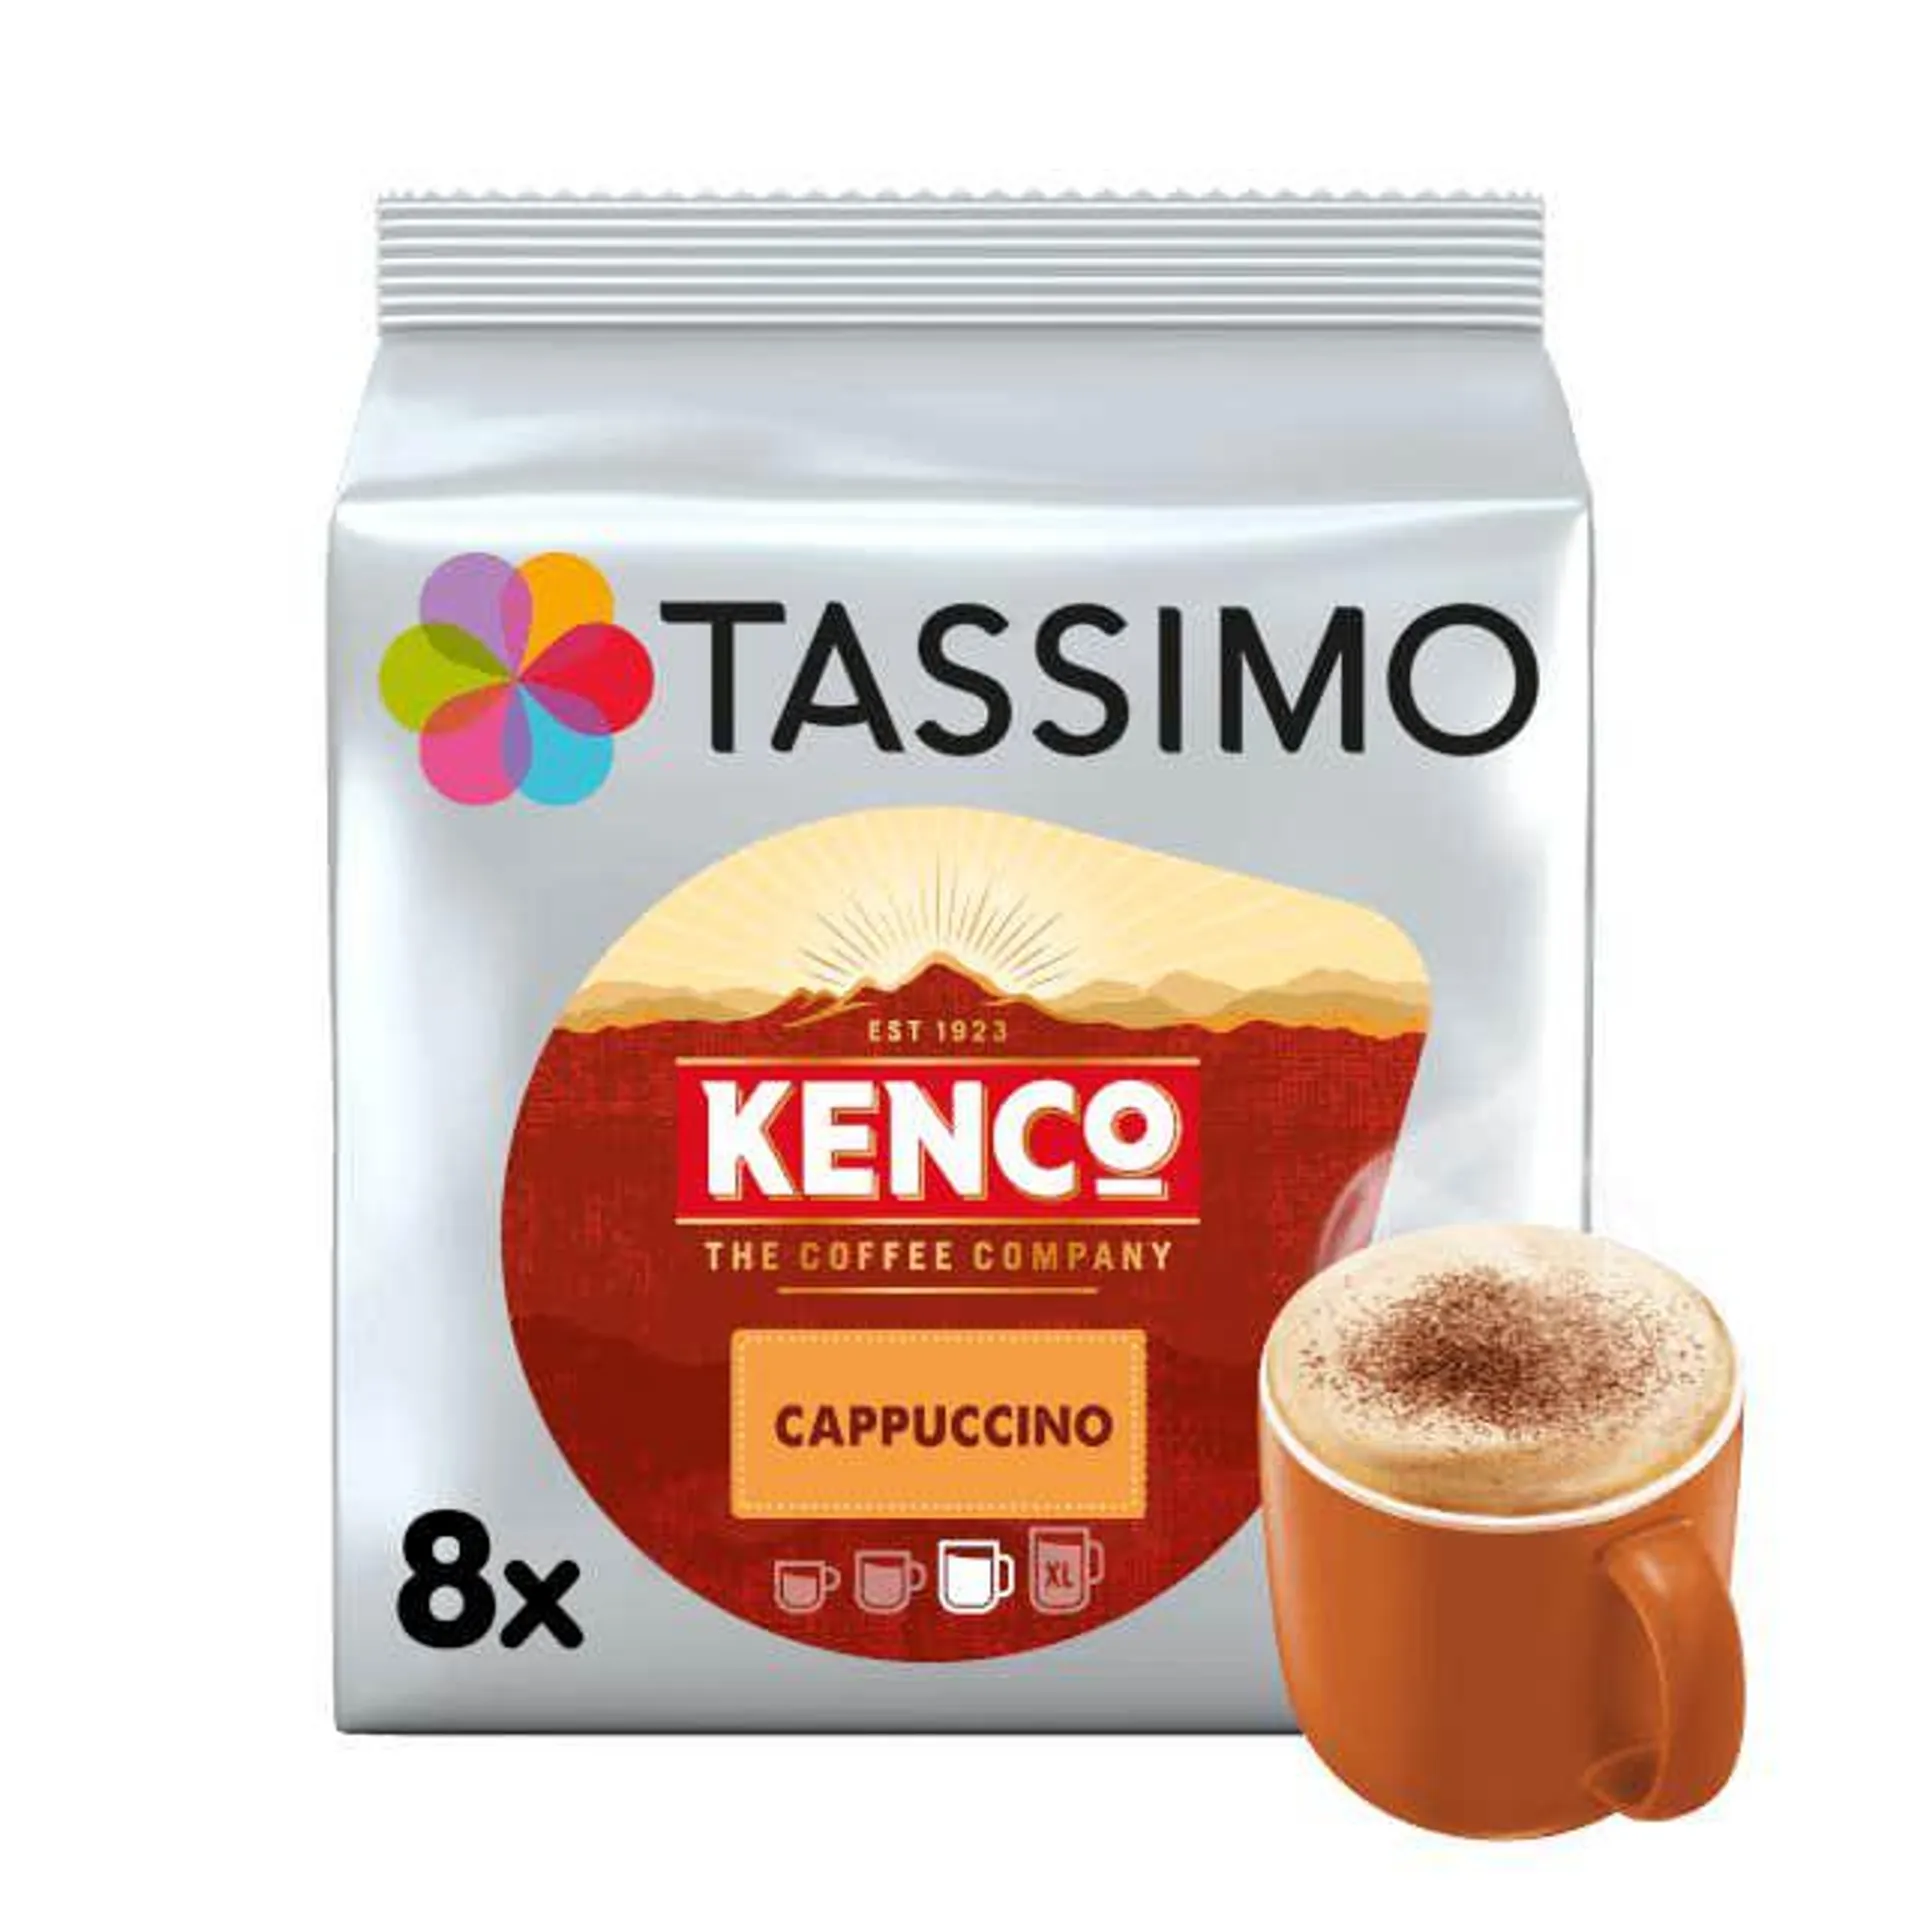 Kenco Cappuccino